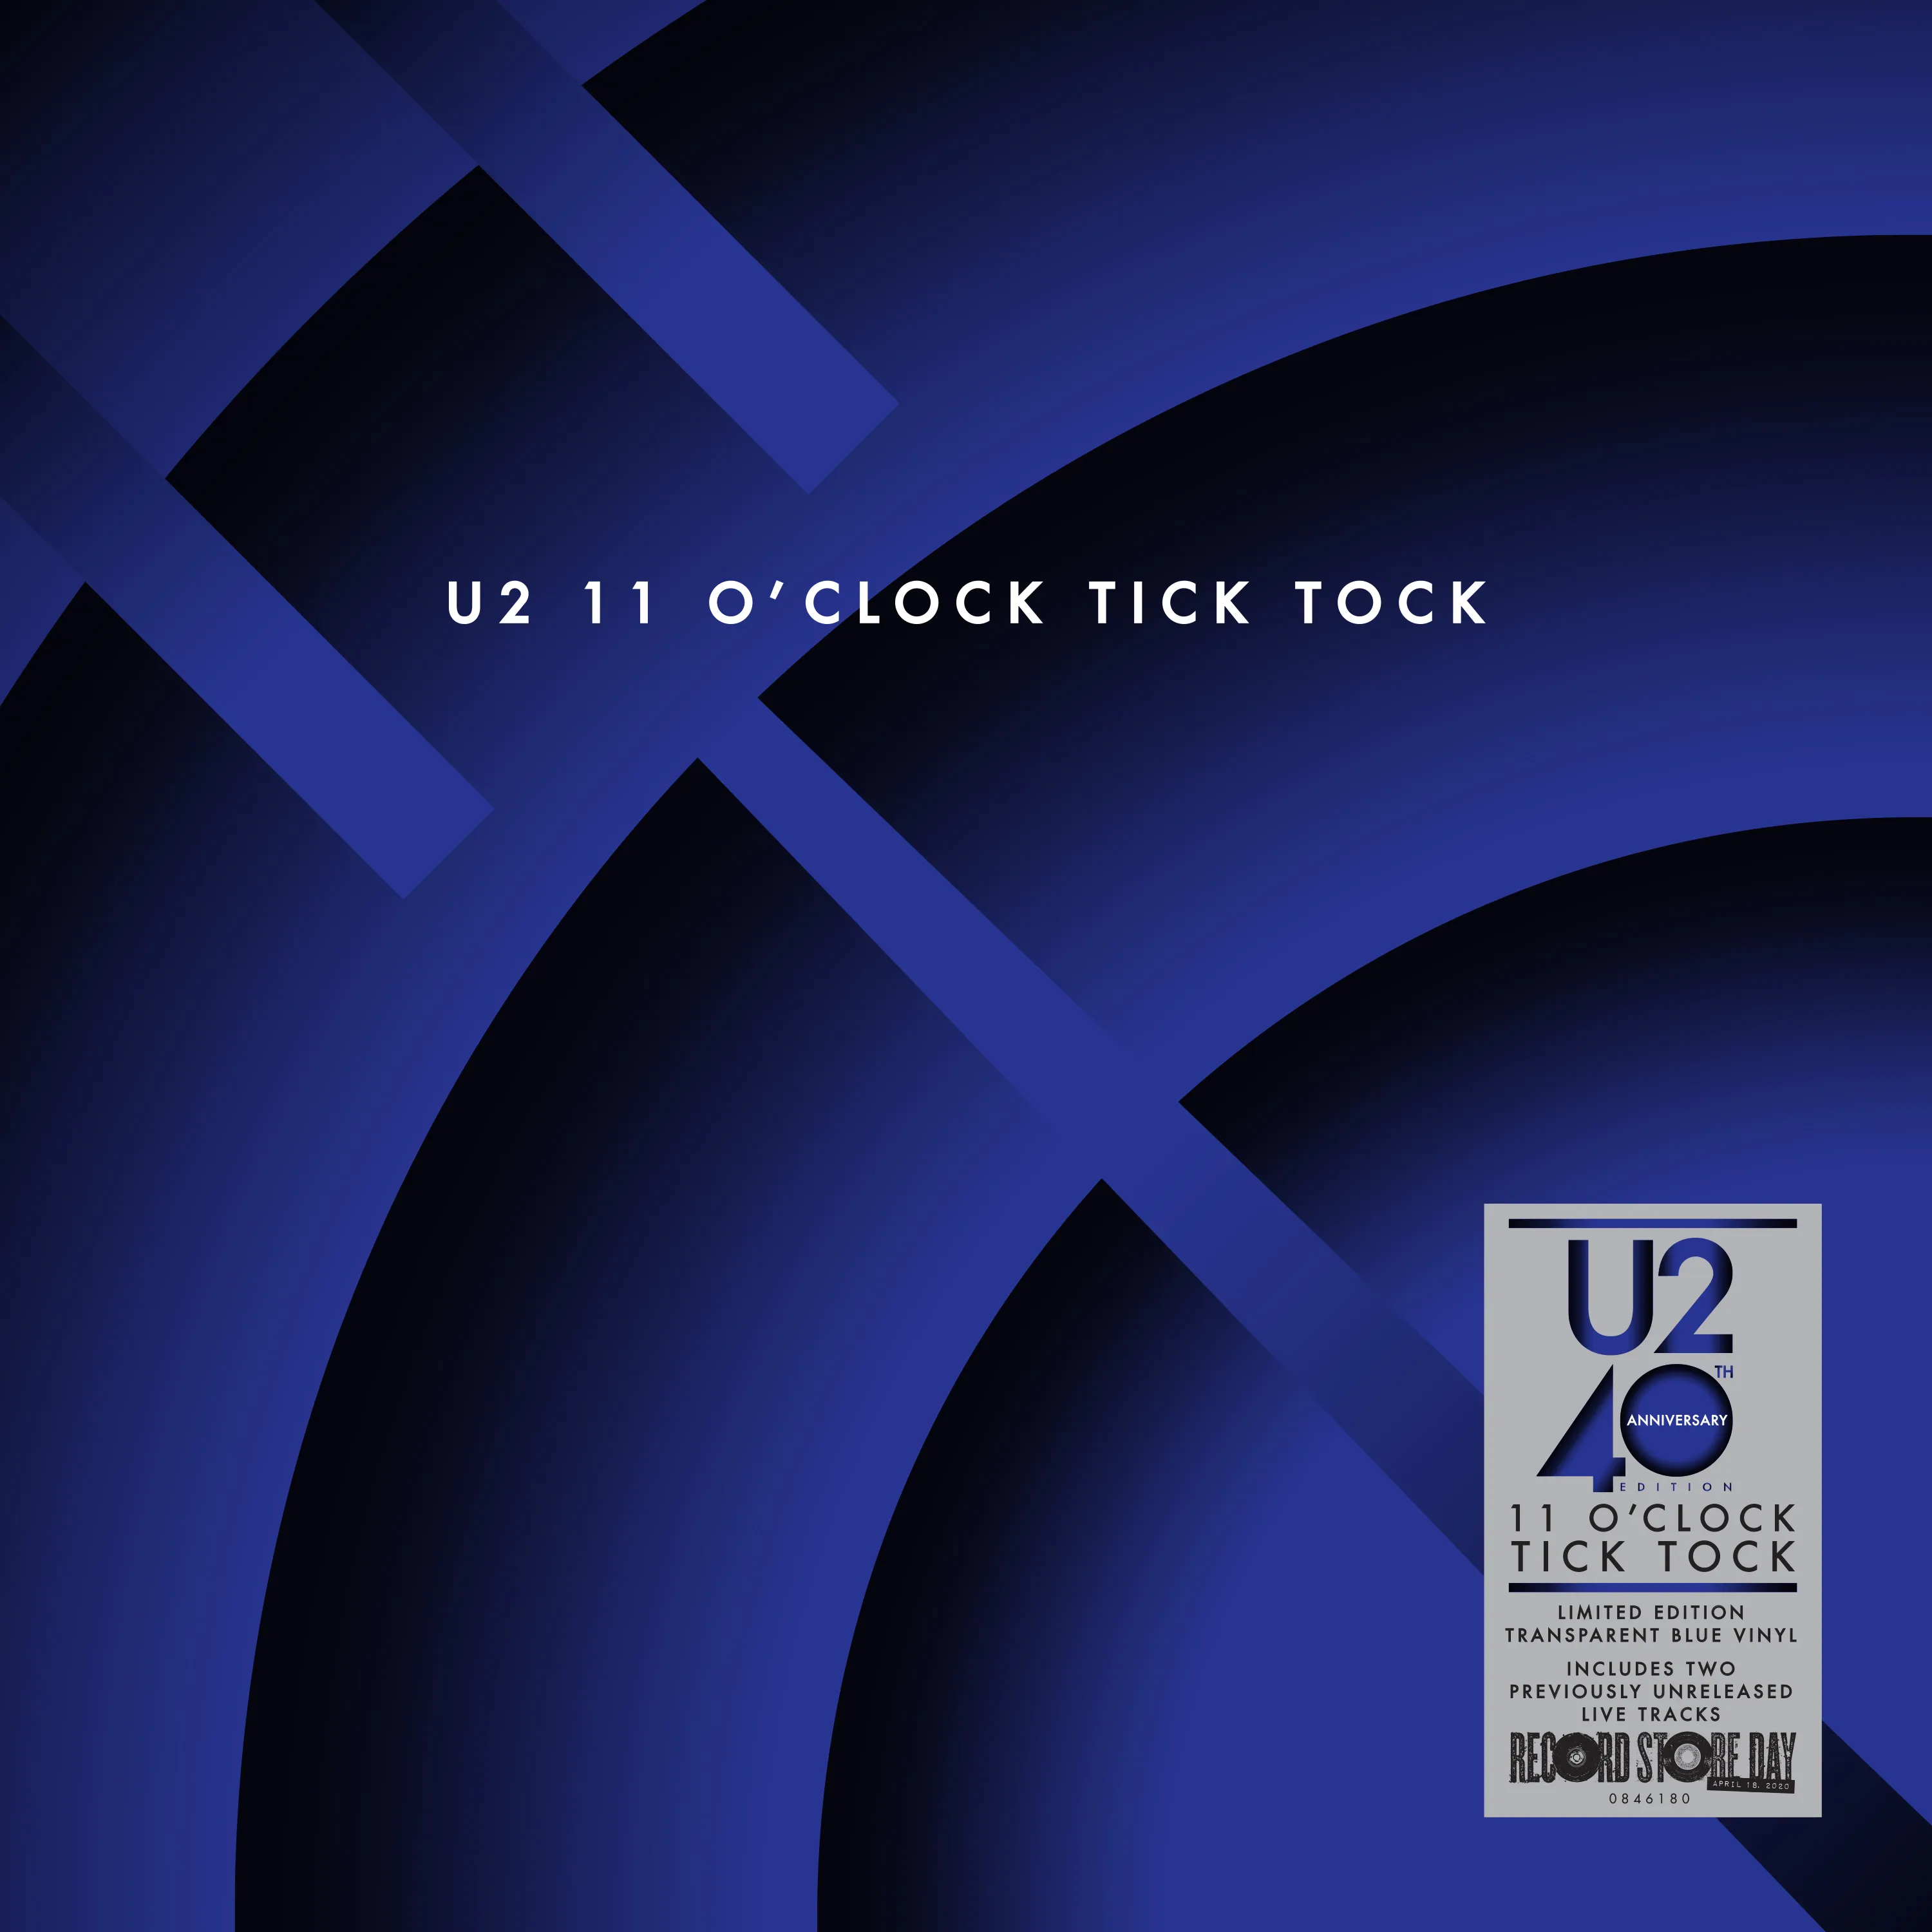 U2 - 11 O’CLOCK TICK TOCK (40th Anniversary Edition) [RSD Drops Aug 2020]